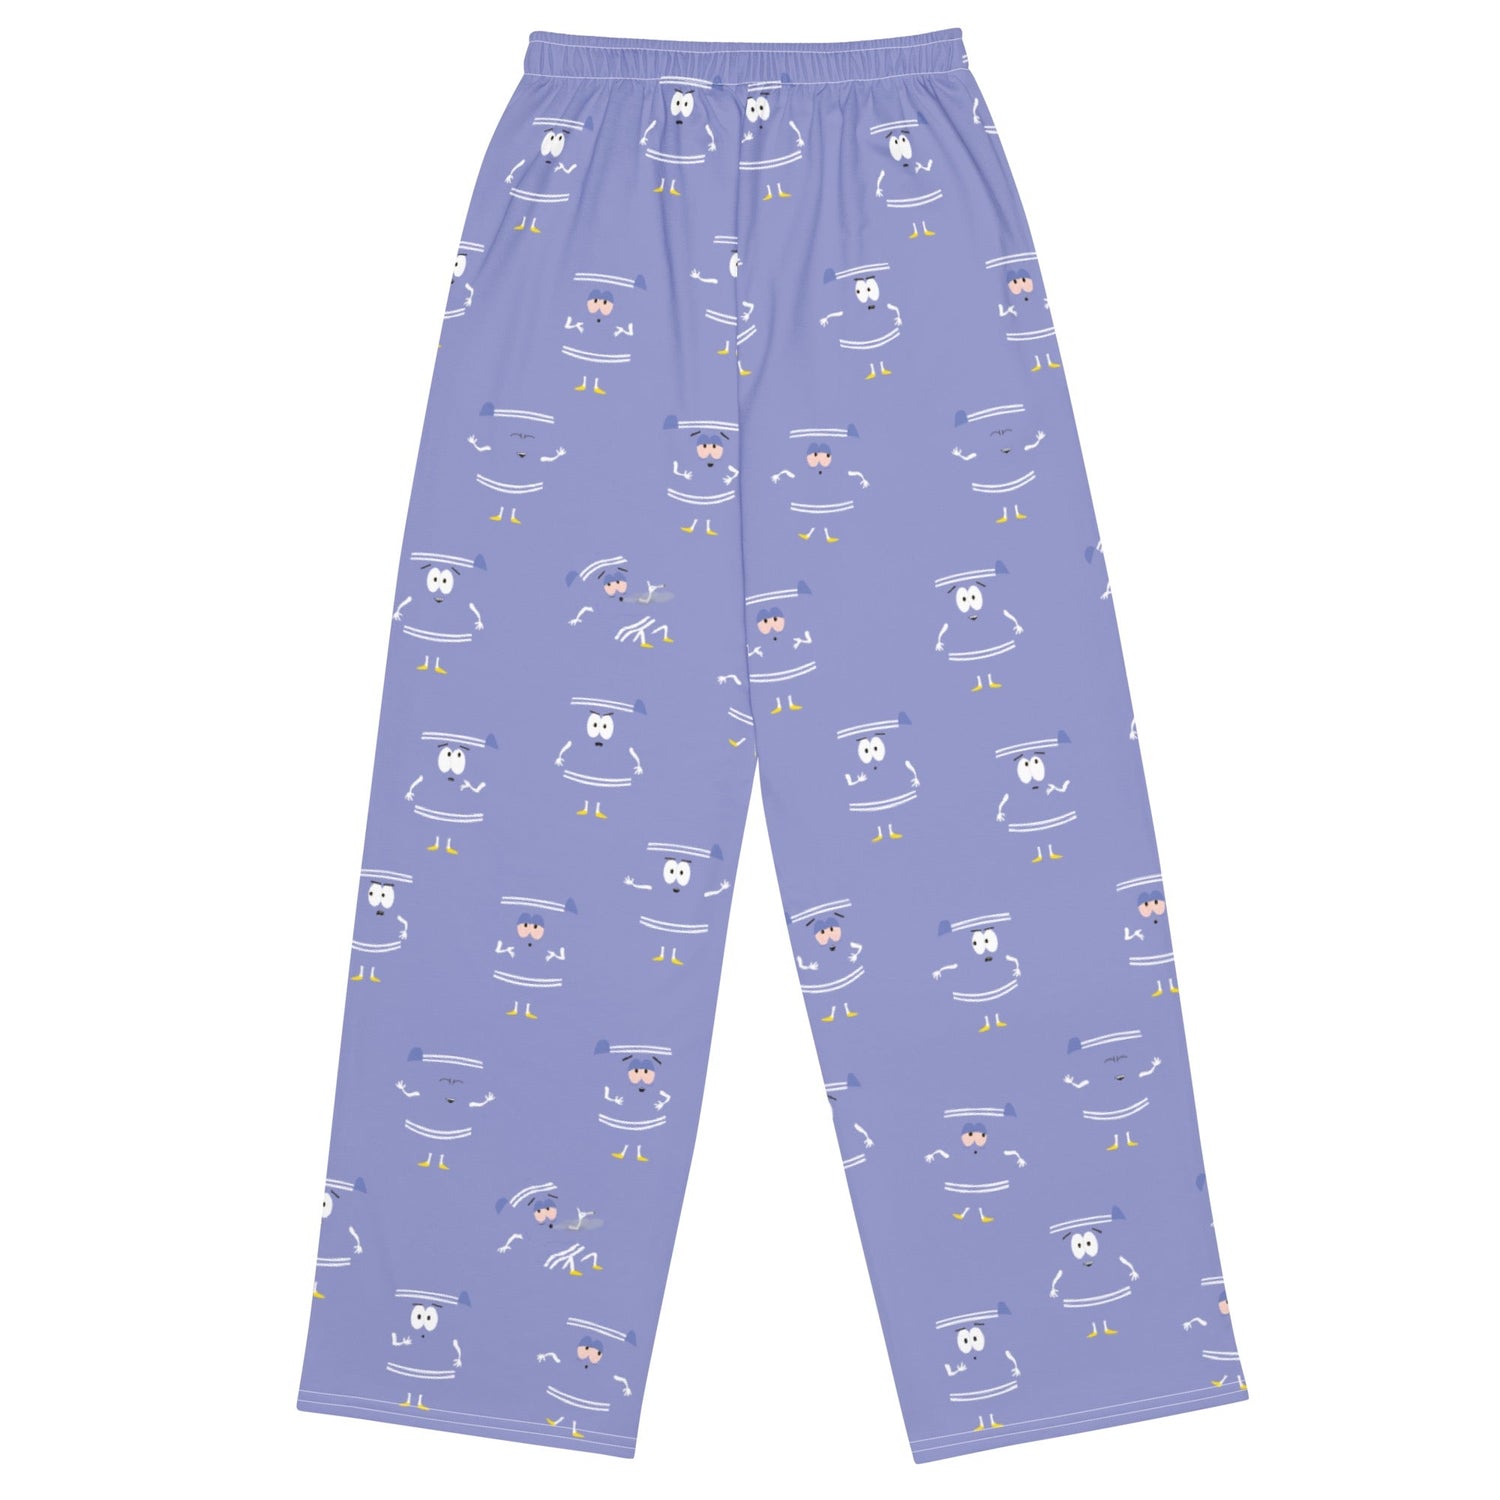 South Park Towelie Pajama Pants - Paramount Shop